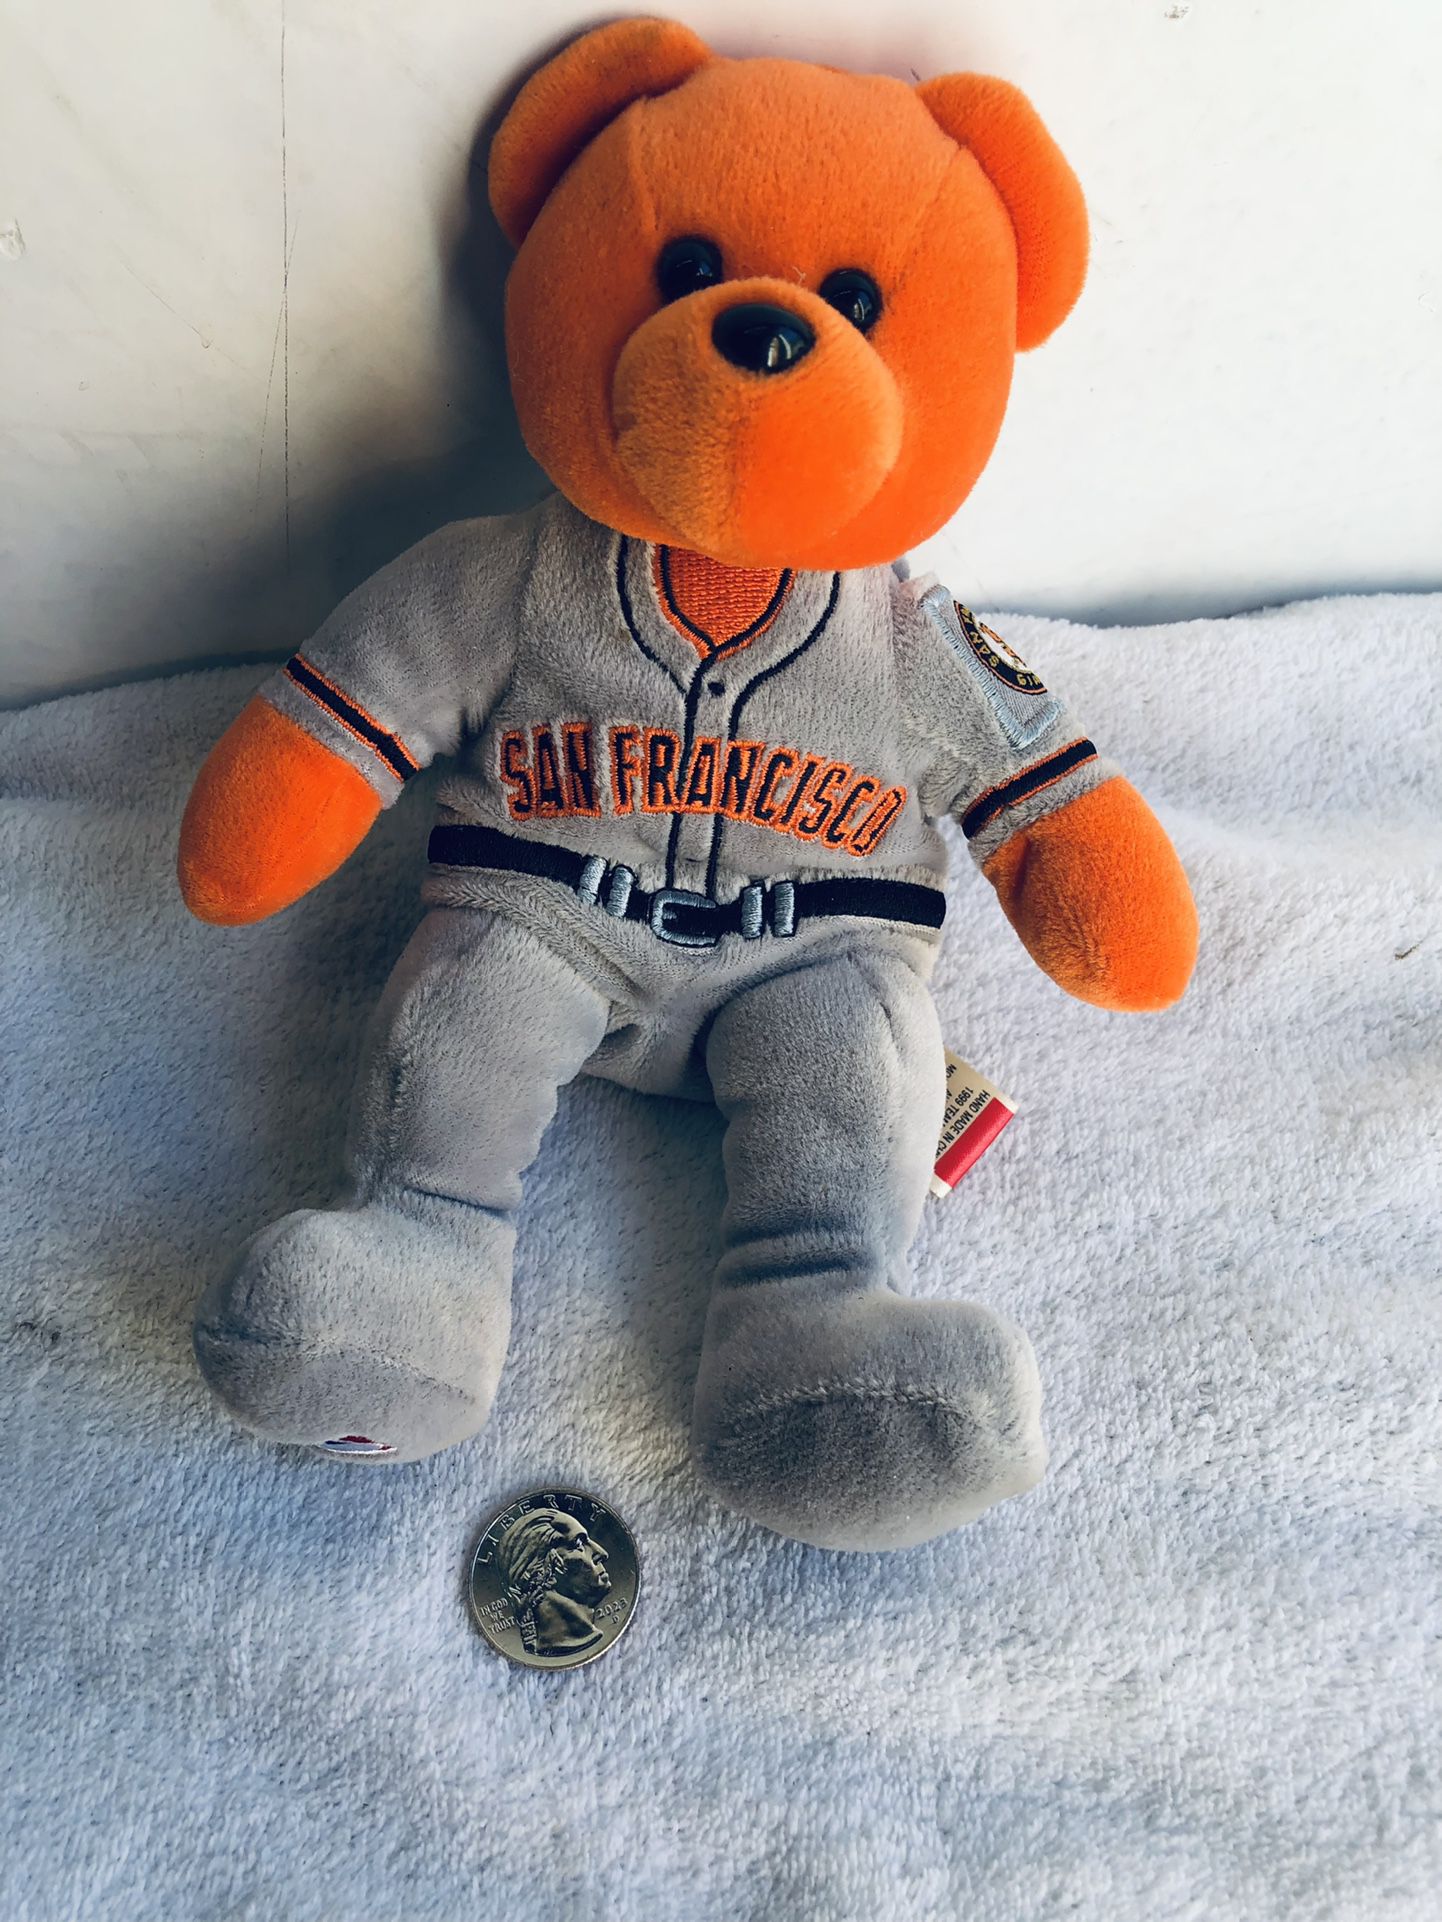 San Francisco Giants plush 8 inch uniform bear